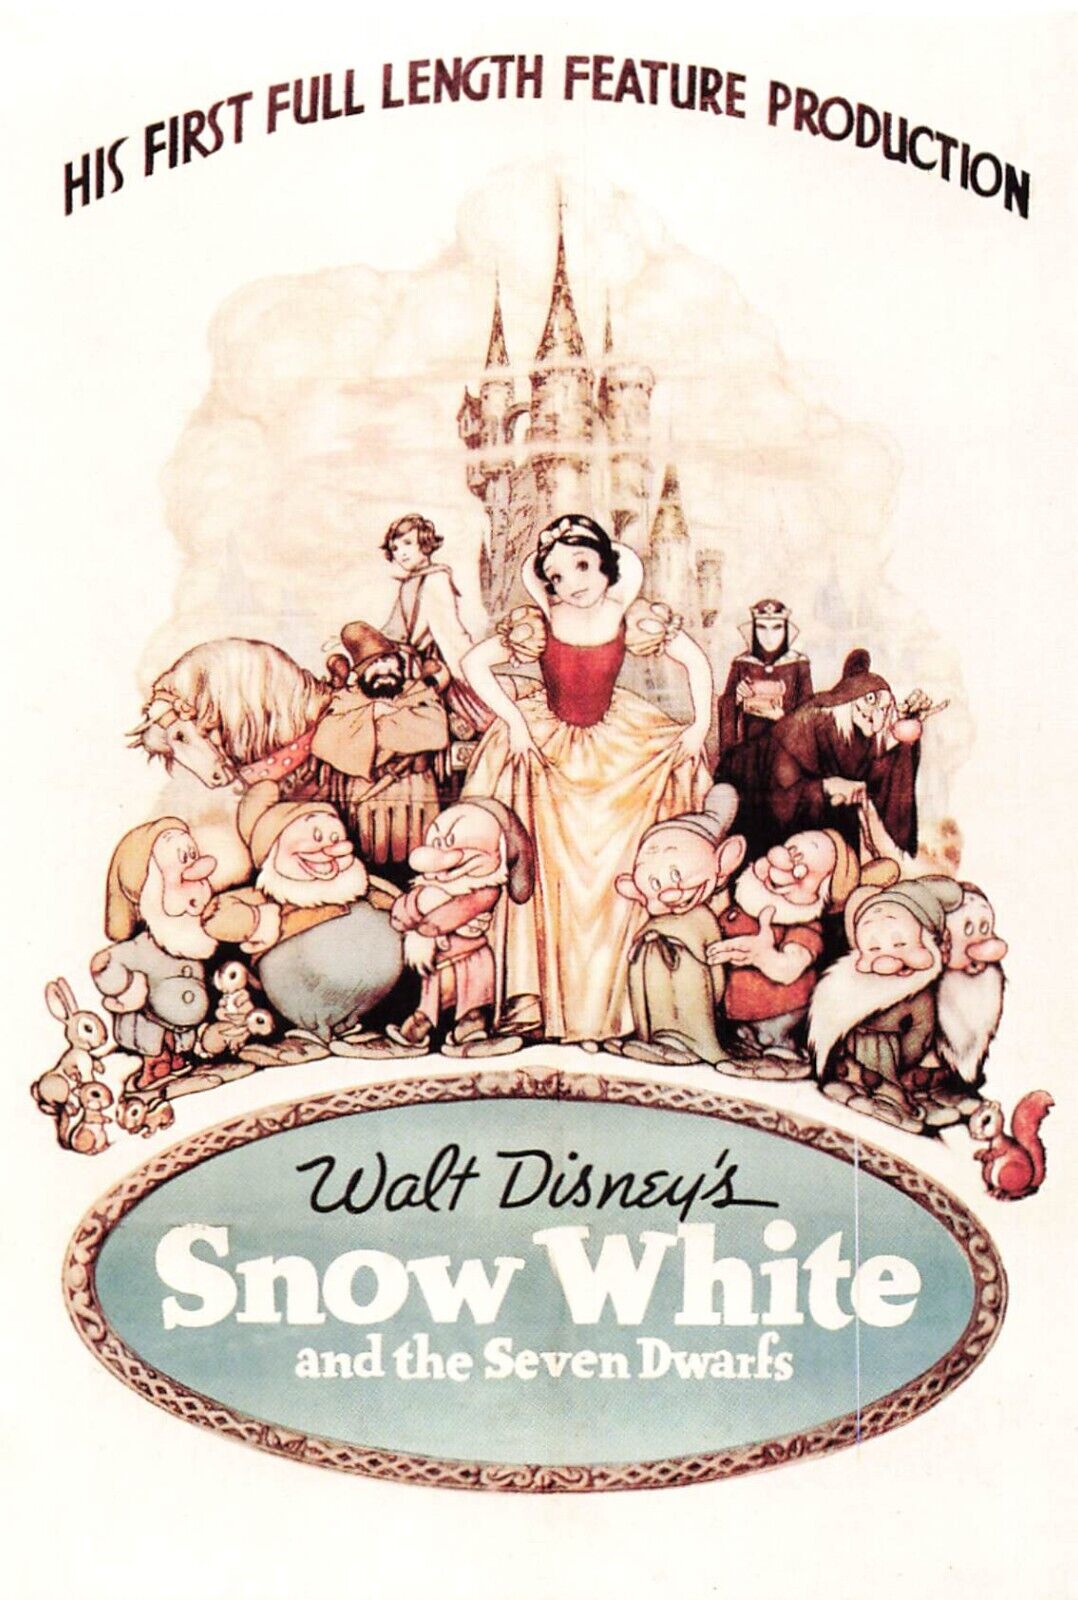 1937 Disney Snow White 7 Seven Dwarfs Mini Movie Poster Postcard Repro 4x6